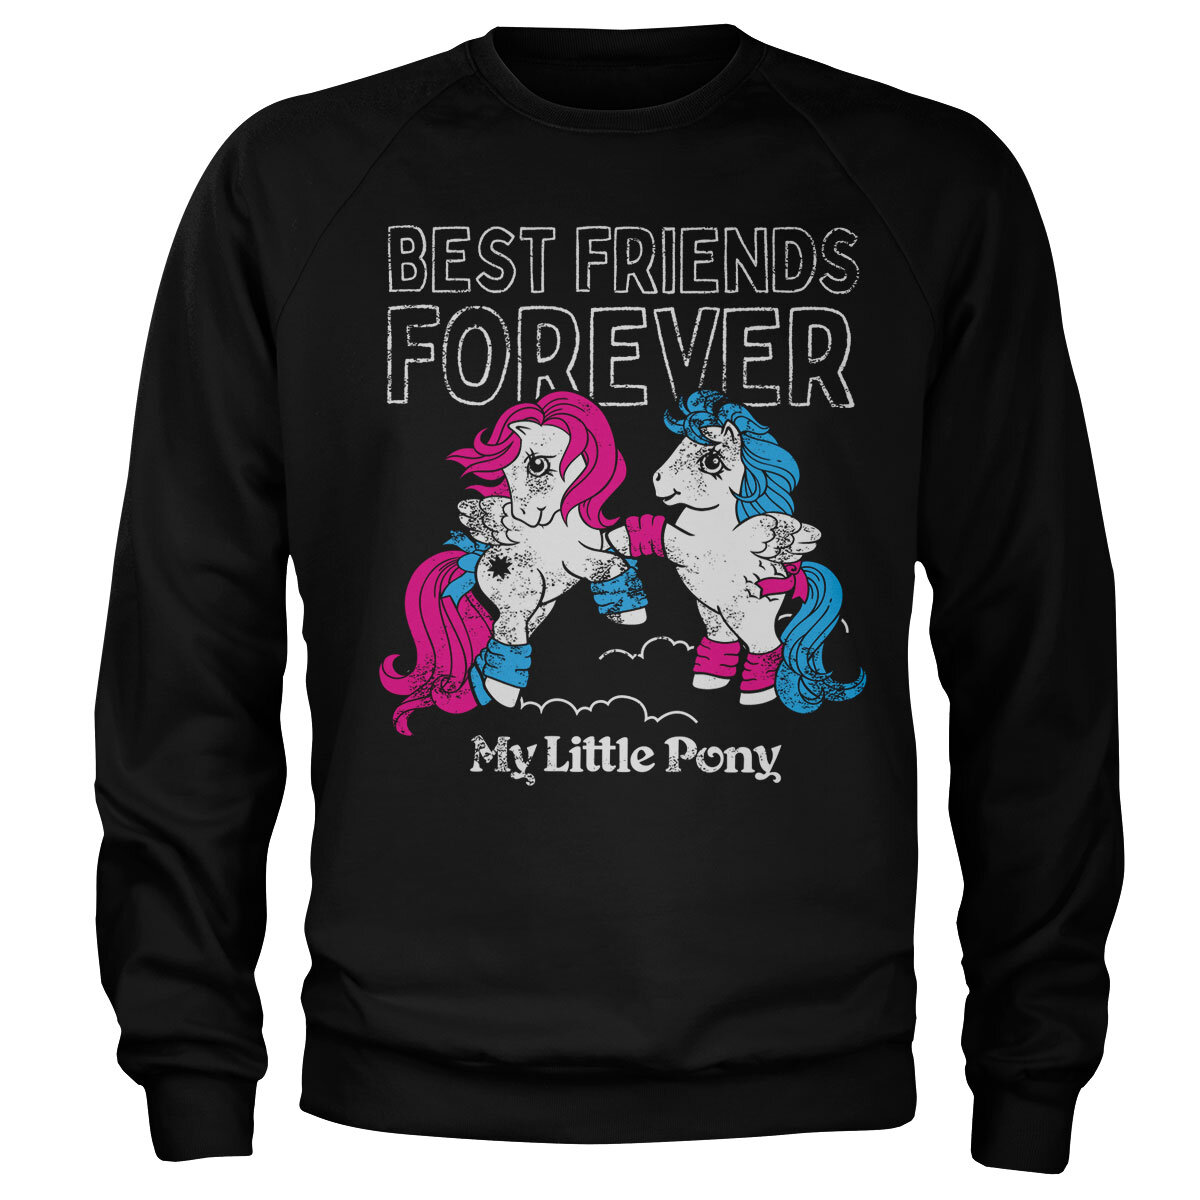 Best Friends Forever Sweatshirt